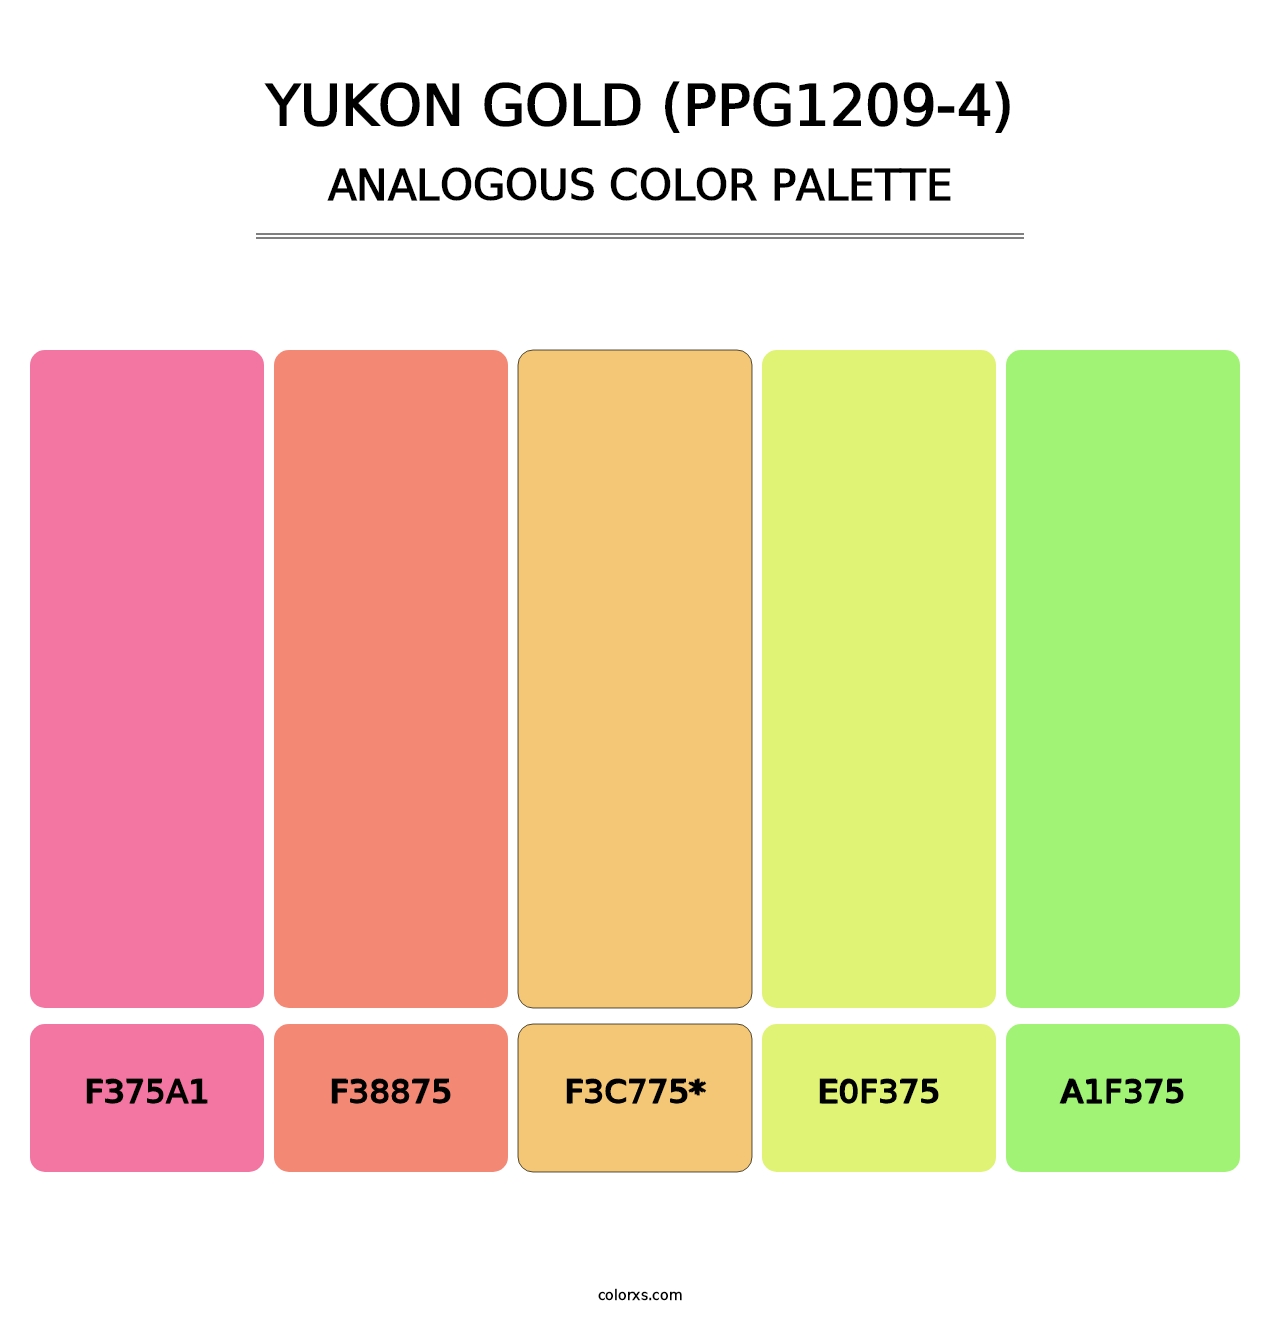 Yukon Gold (PPG1209-4) - Analogous Color Palette